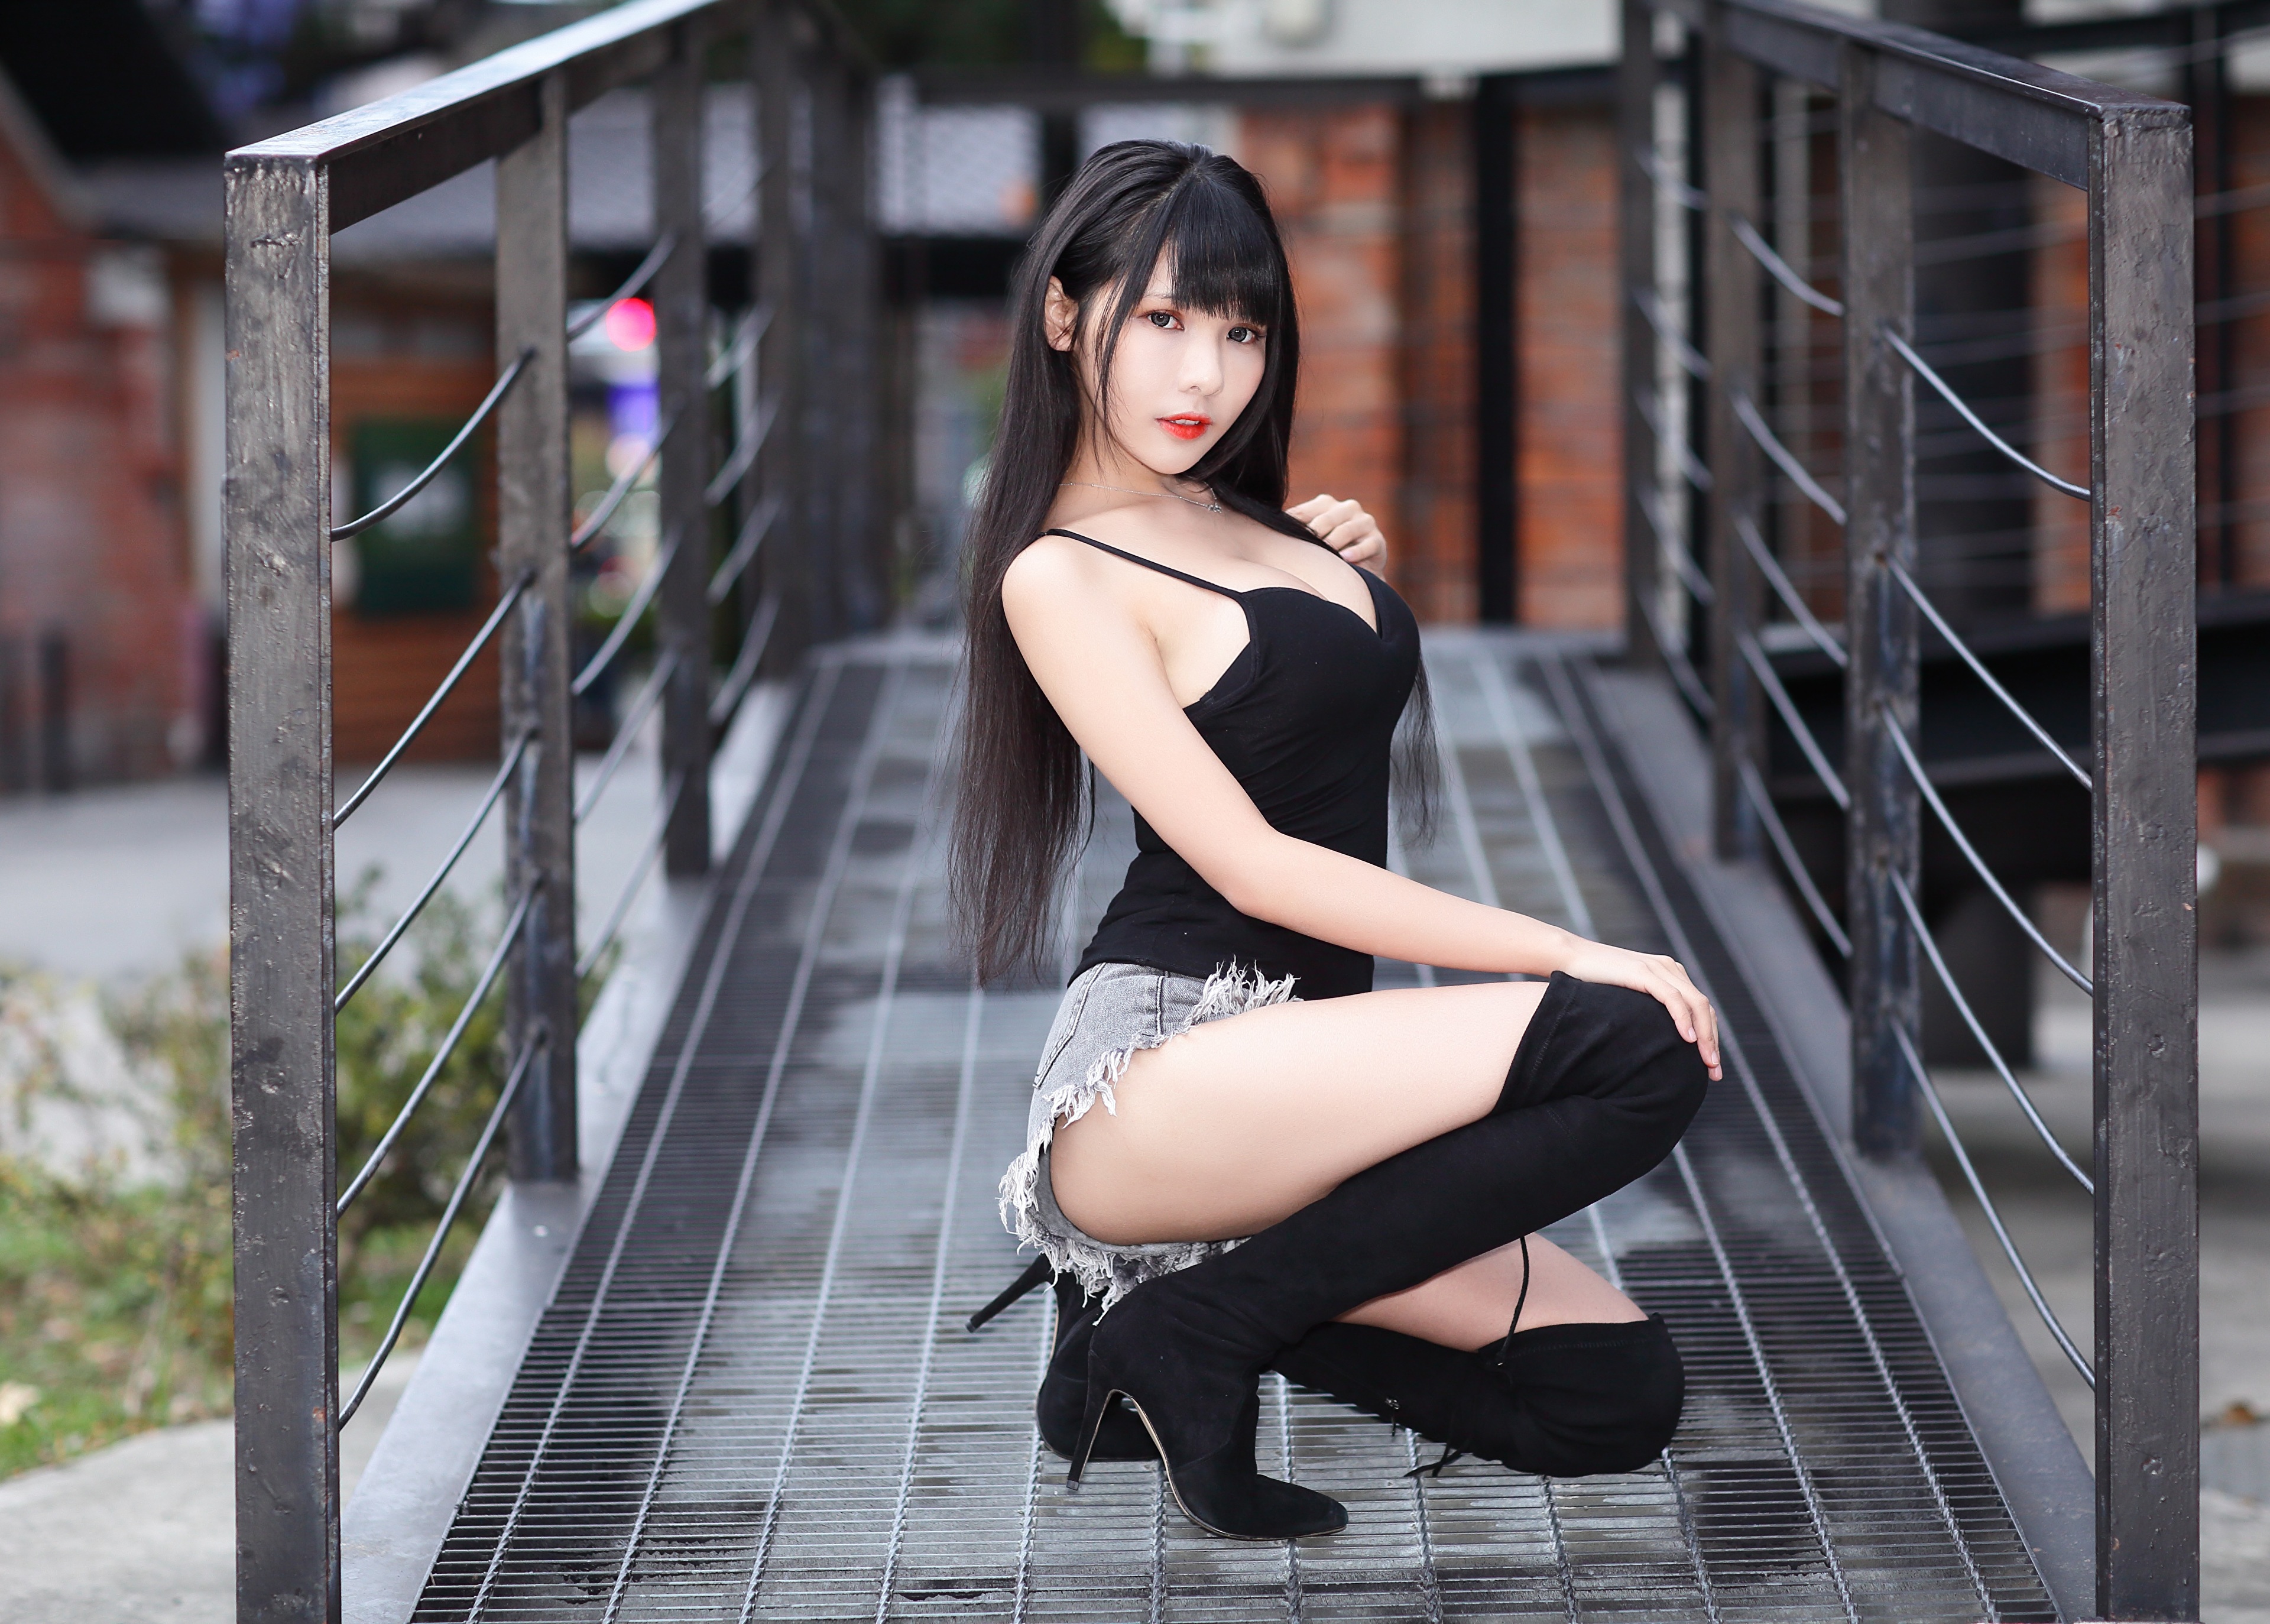 Asian Model Women Long Hair Dark Hair Vicky Asian Model Knee High Boots Jean Shorts Black Shirt Brid 3840x2747